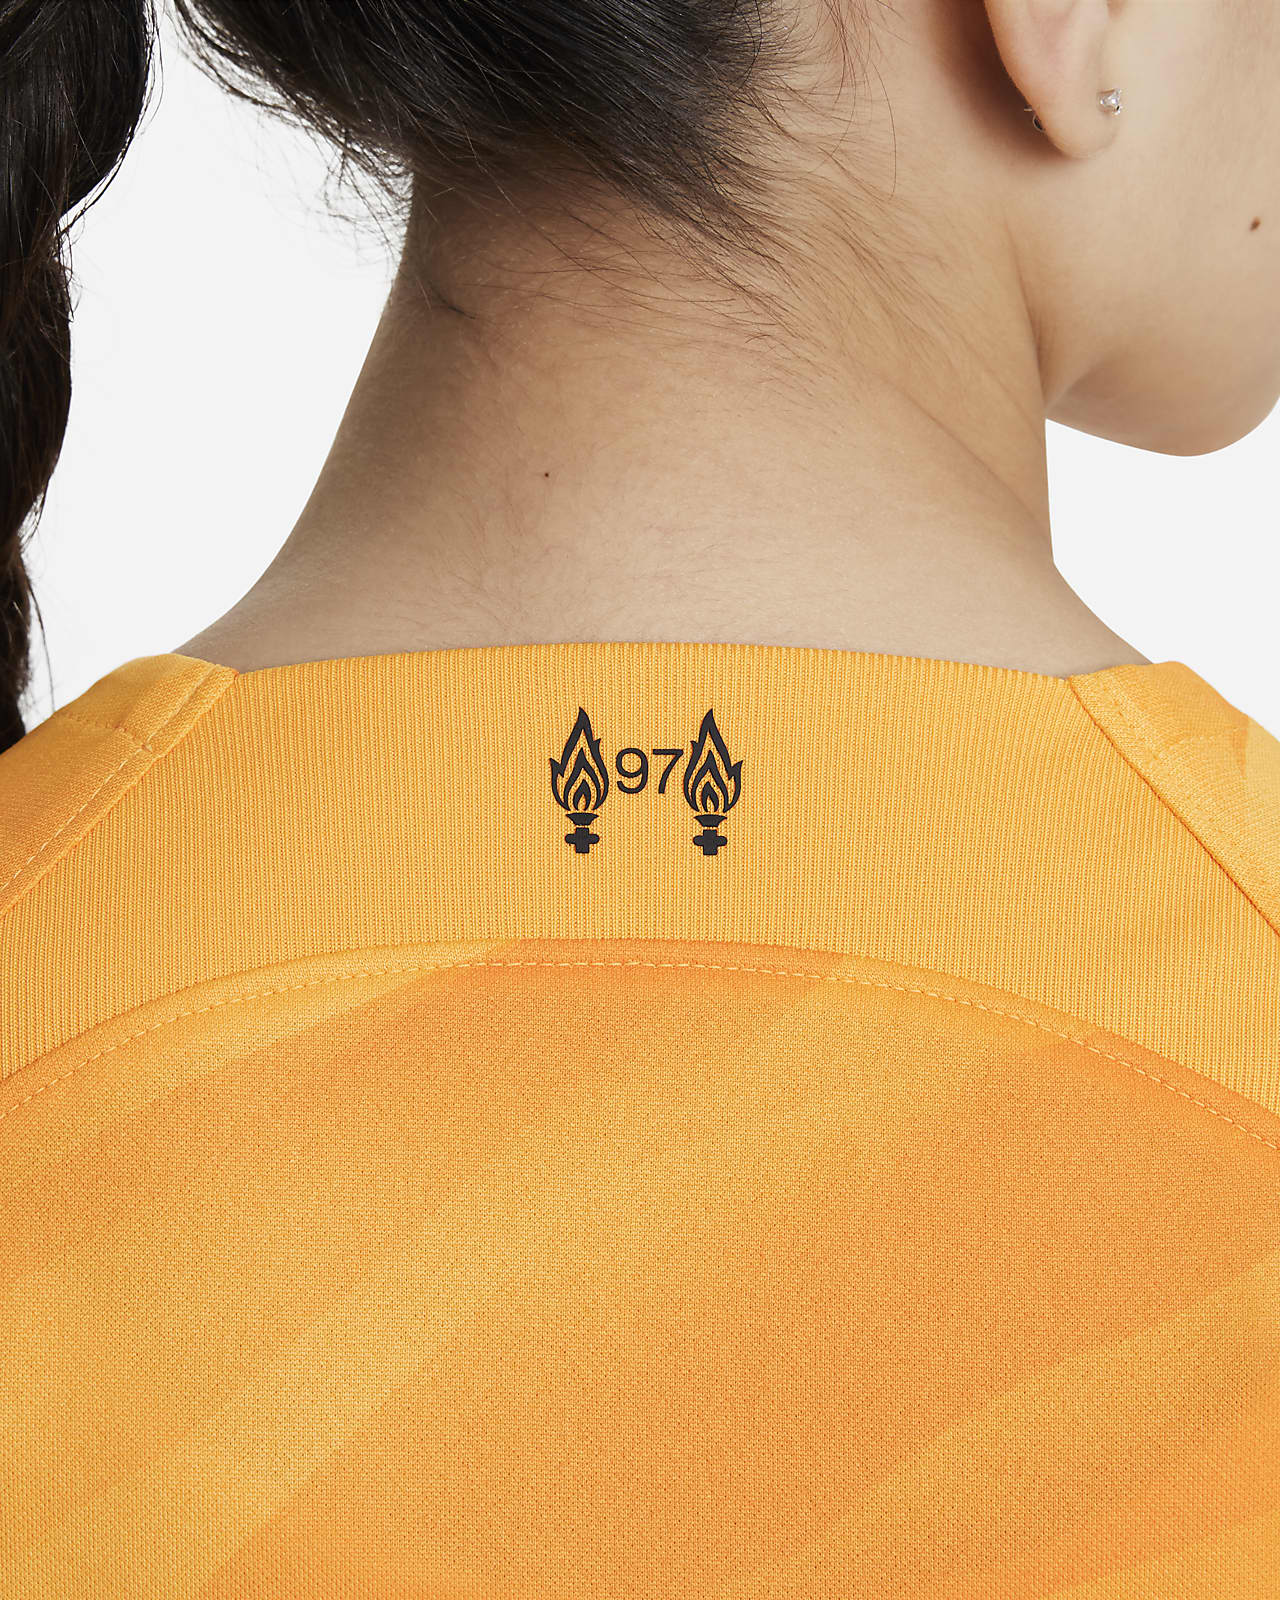 Camiseta portero Nike Gardien niño amarilla